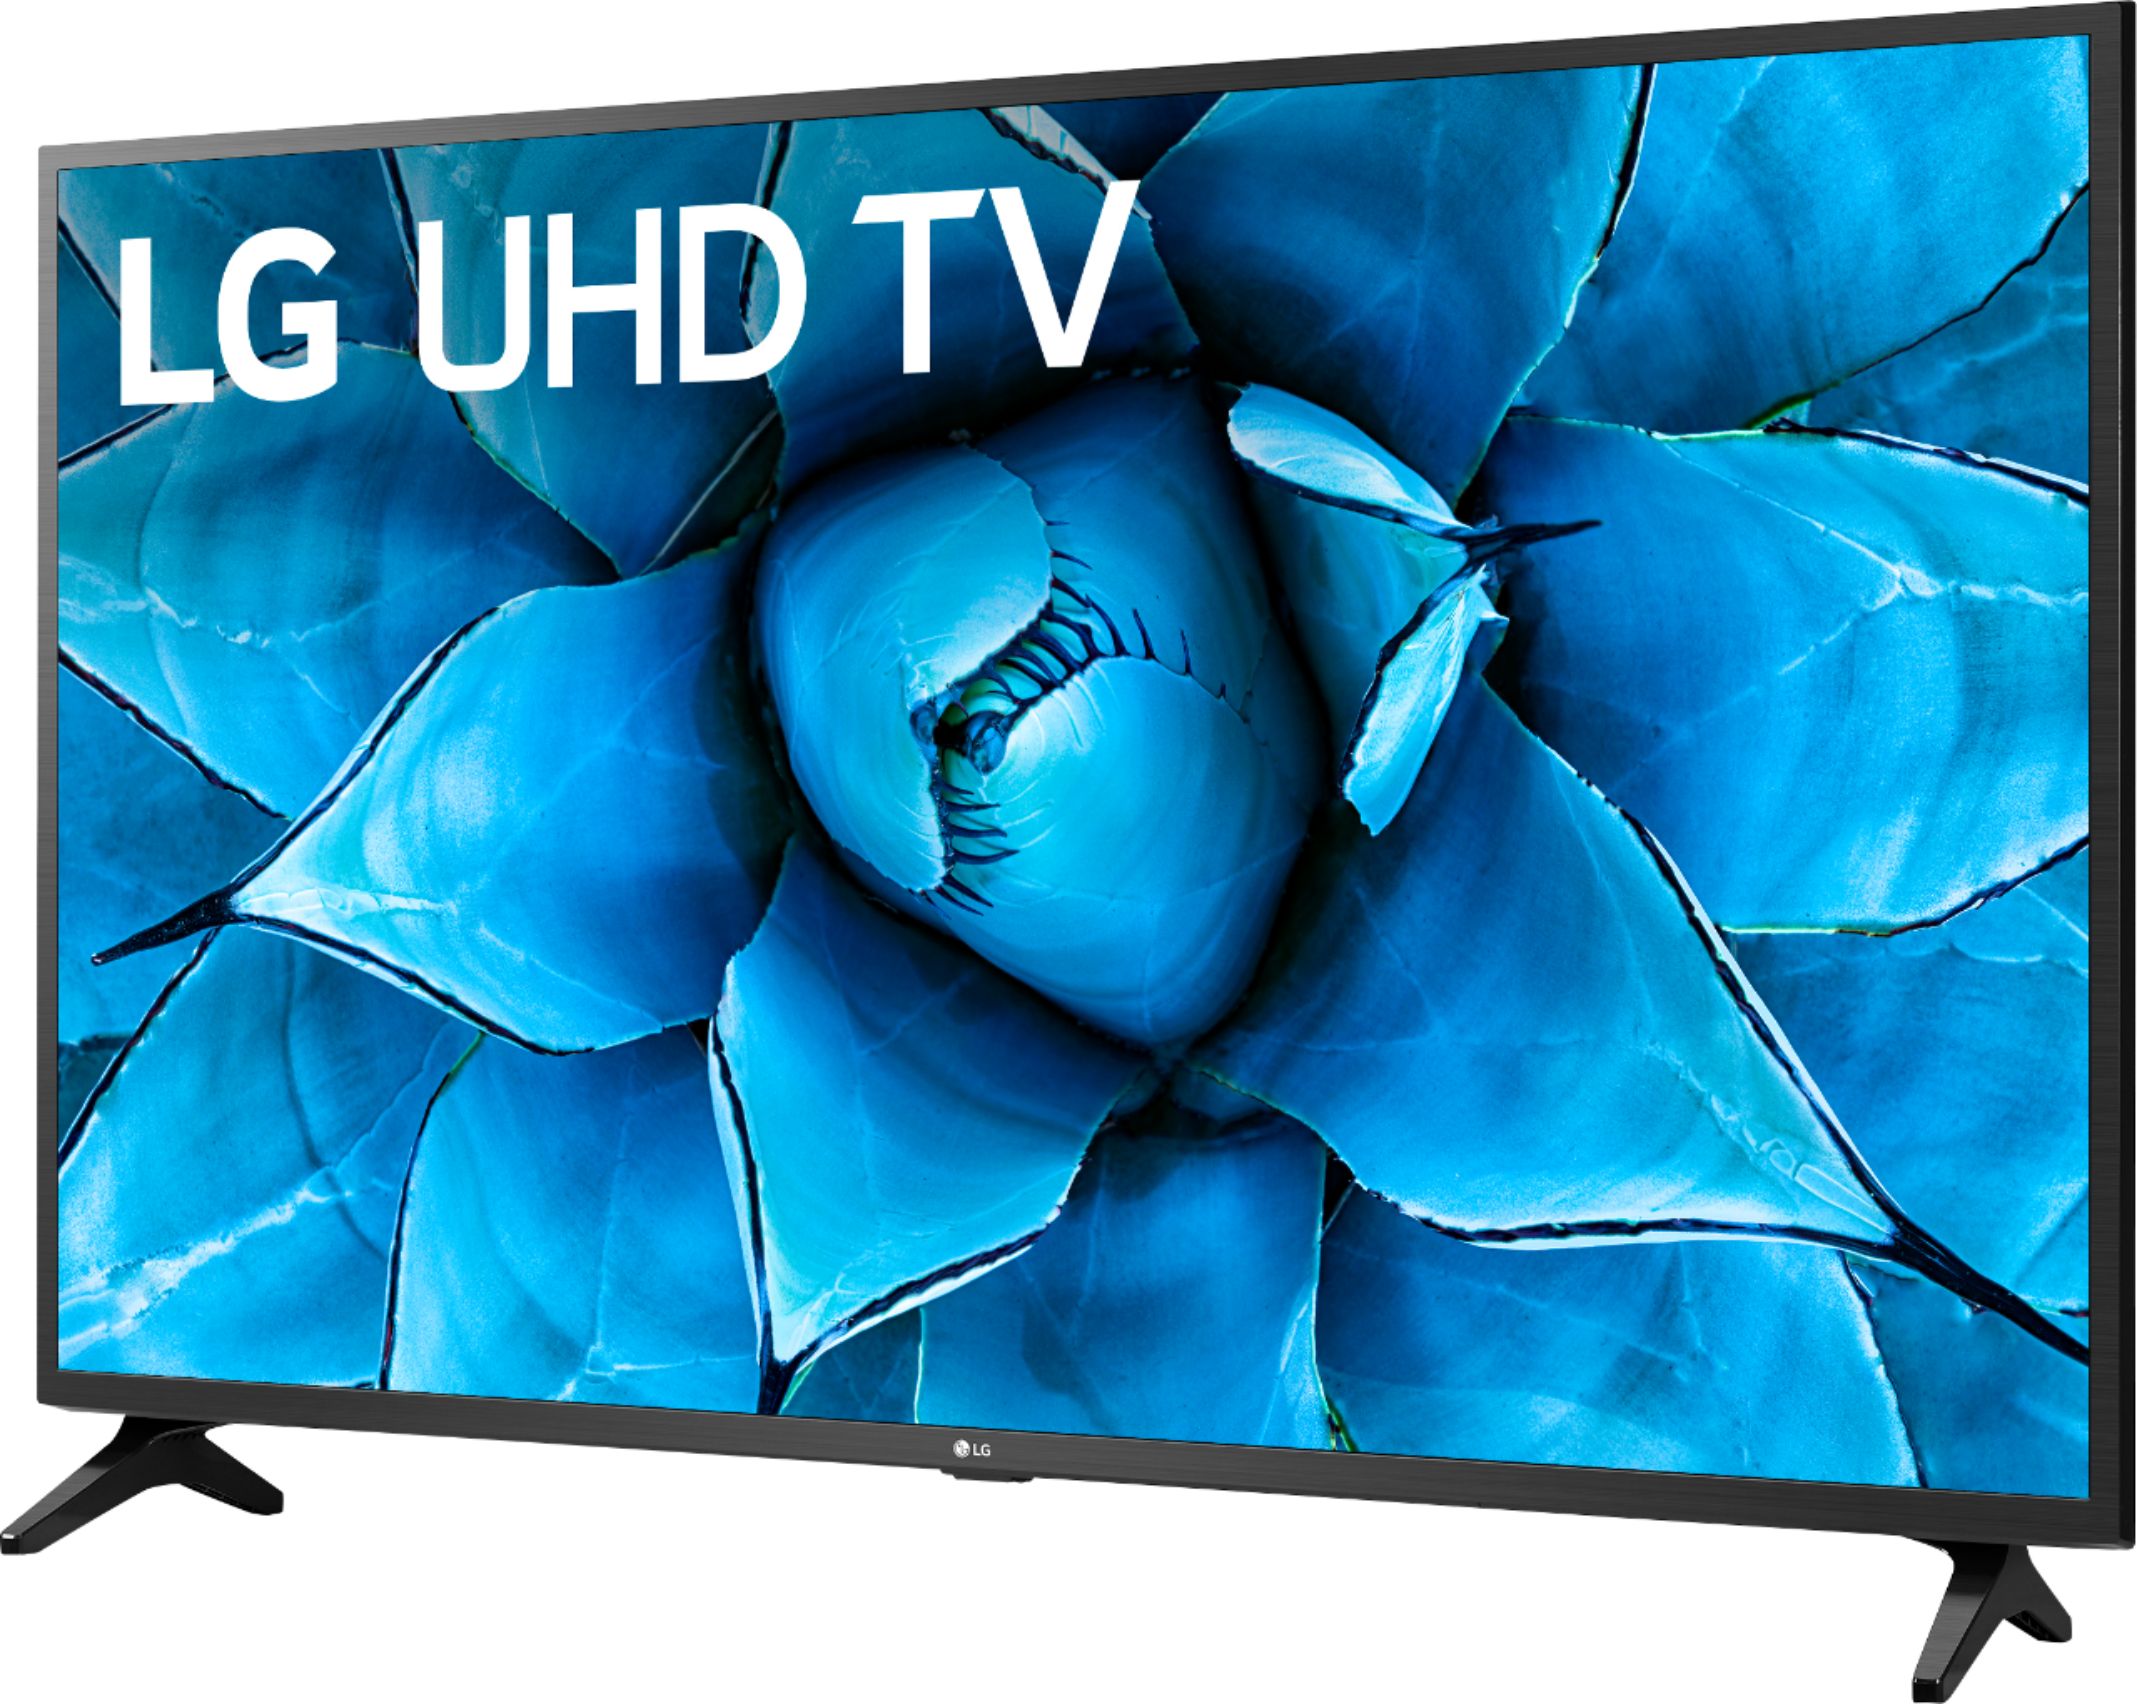 Unboxing LG 65 inch Class 4K Smart UHD TV with AI ThinQ - (65UM7300PUA) -  2019-2020 